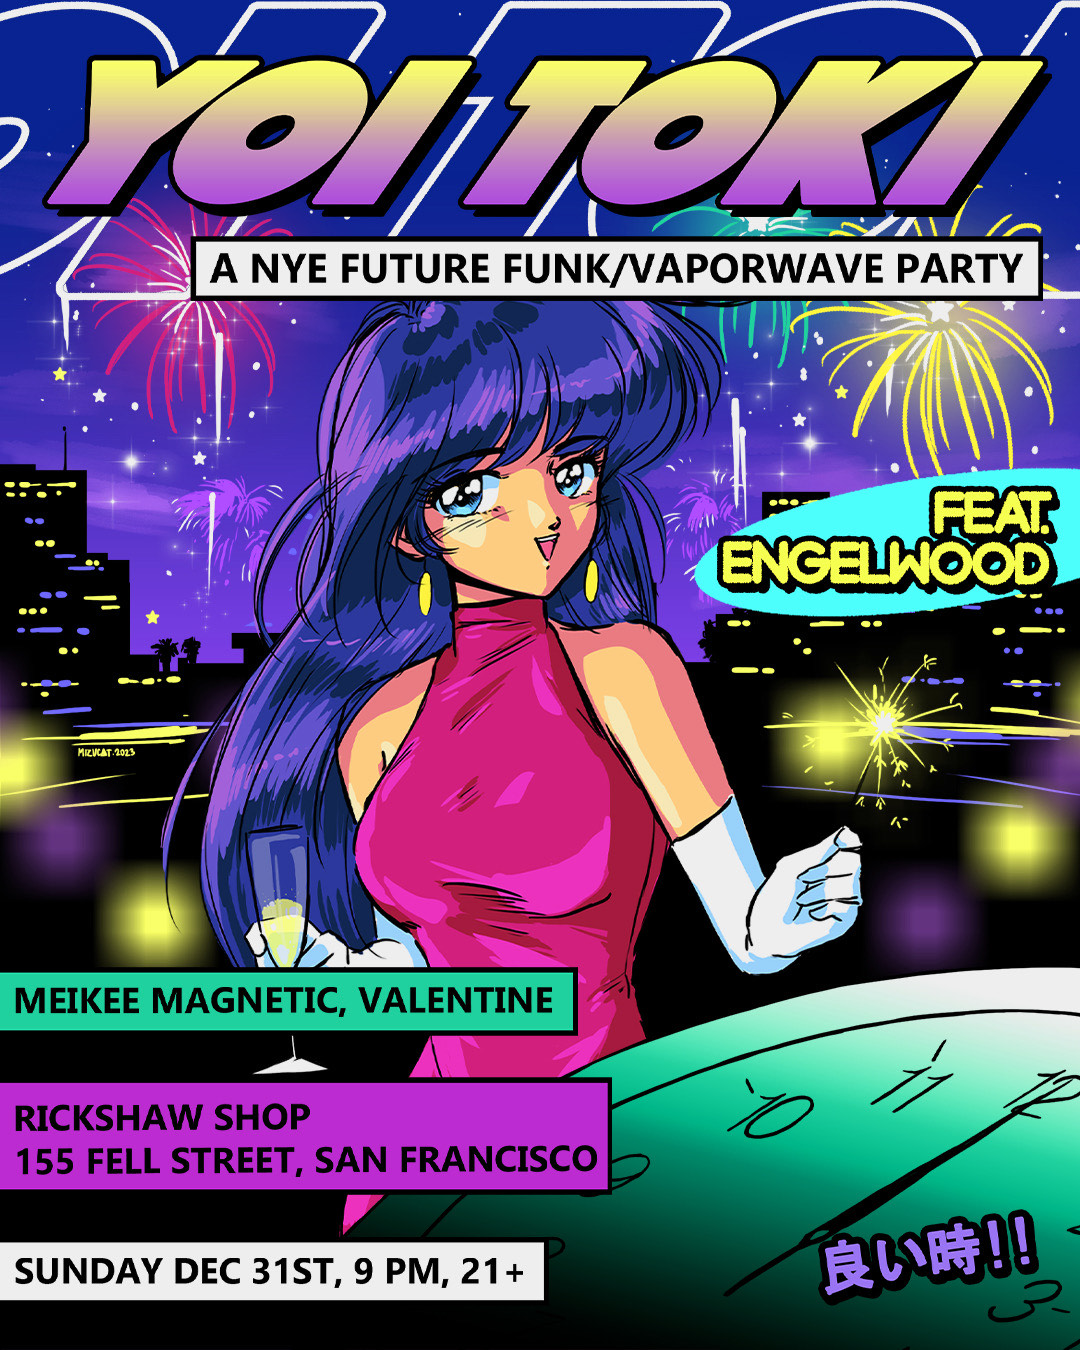 YOI TOKI A Future Funk/Vaporwave New Year's Eve Party at Rickshaw 